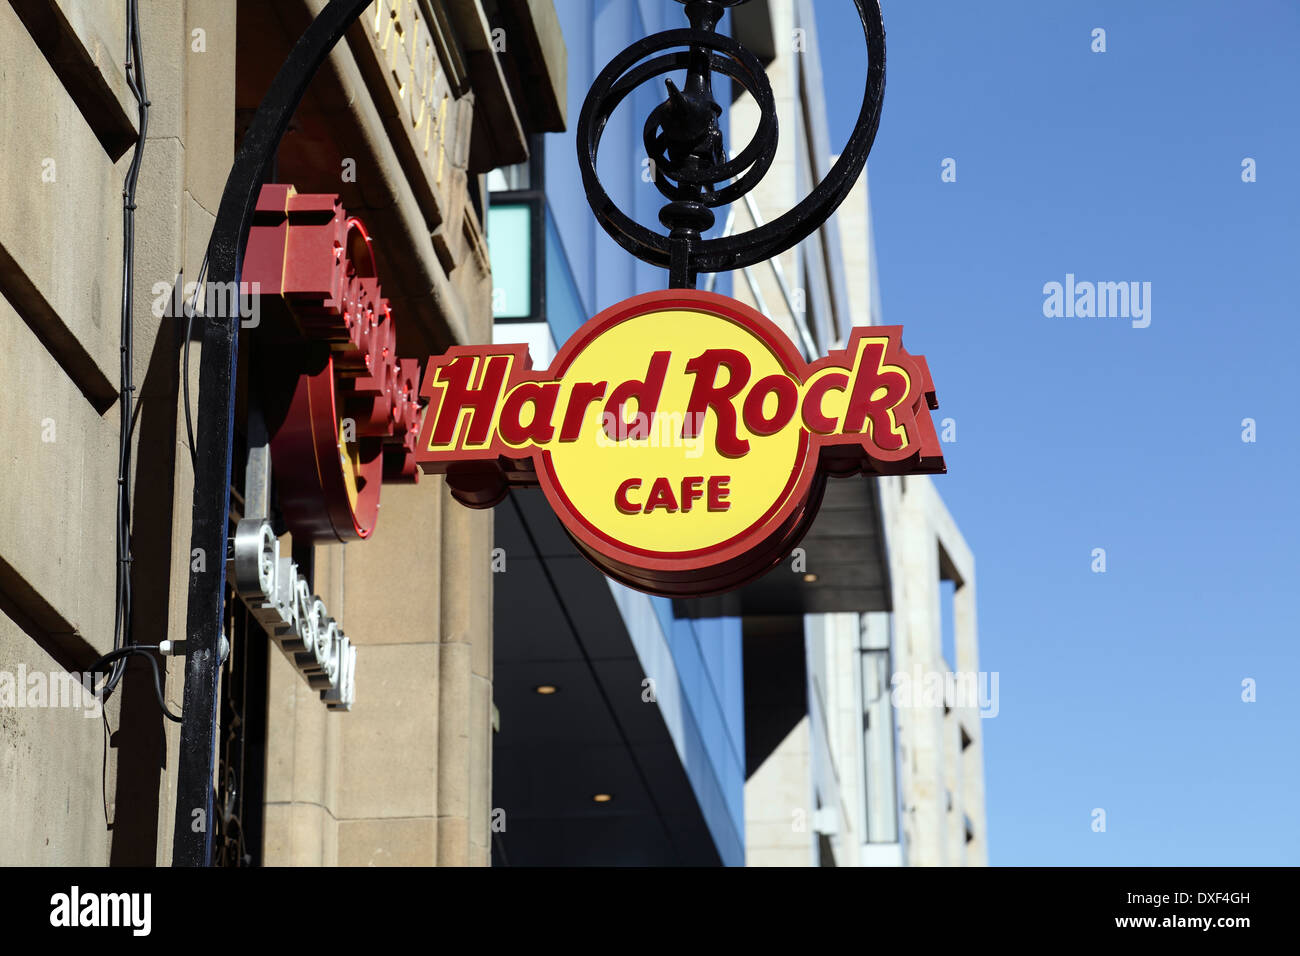 Hard Rock Cafe sign in Glasgow city centre, Scotland, UK Stock Photo